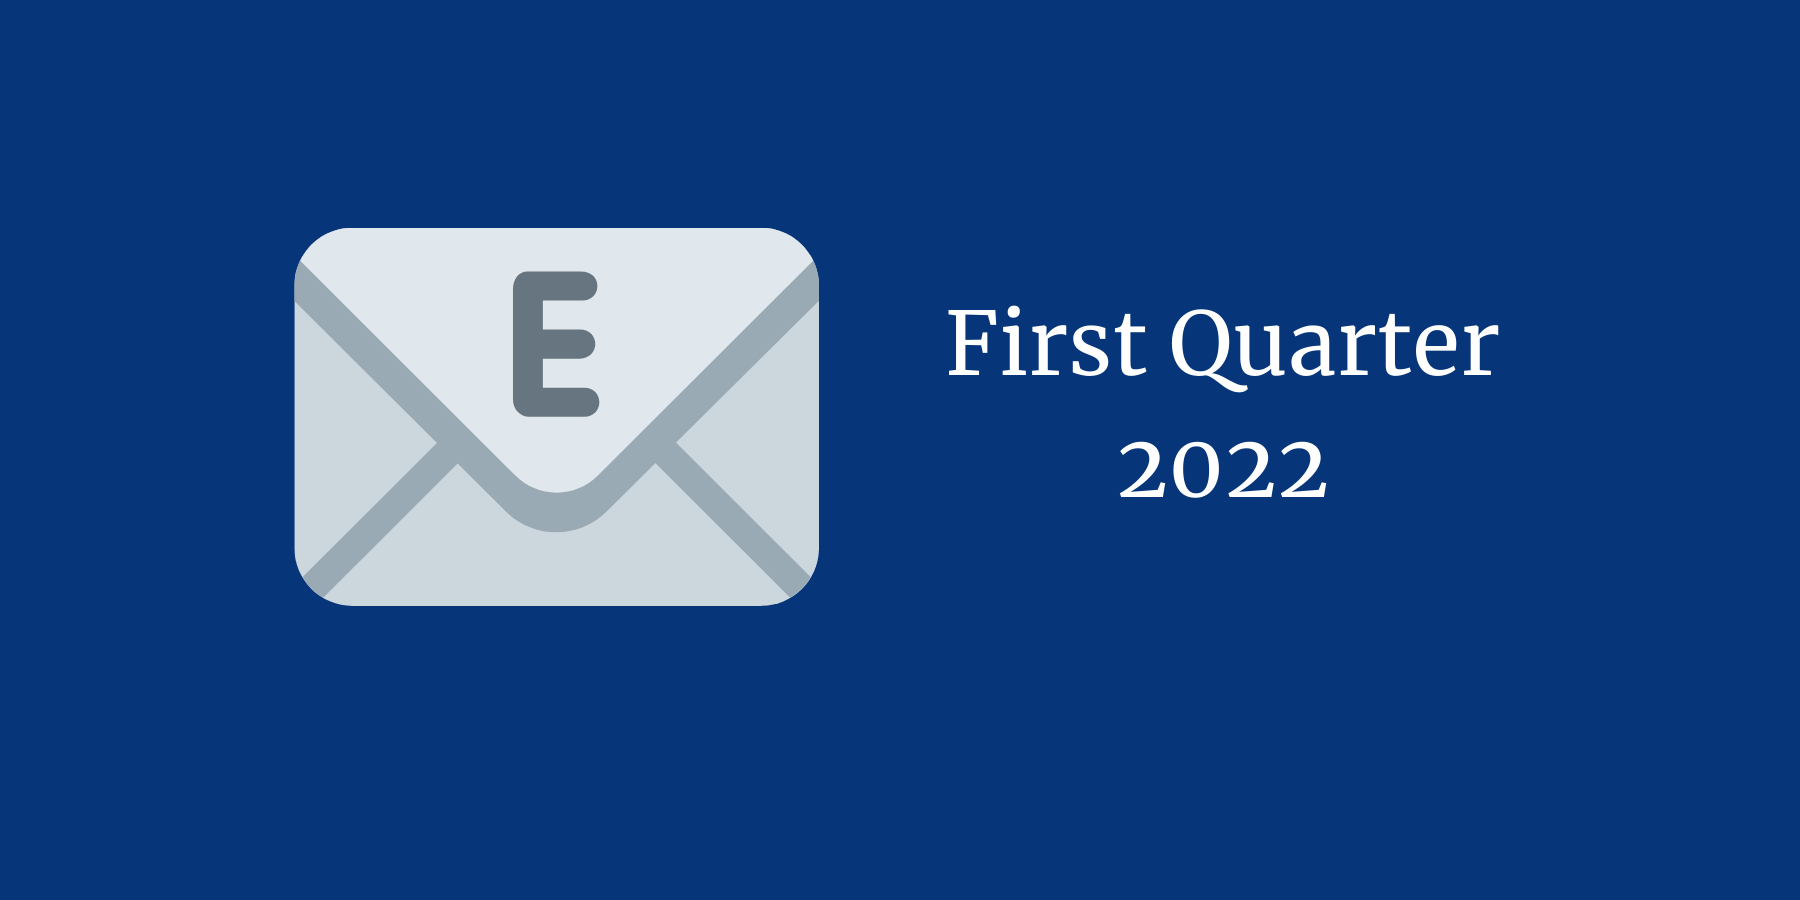 envelope icon next to text: First Quarter 2022